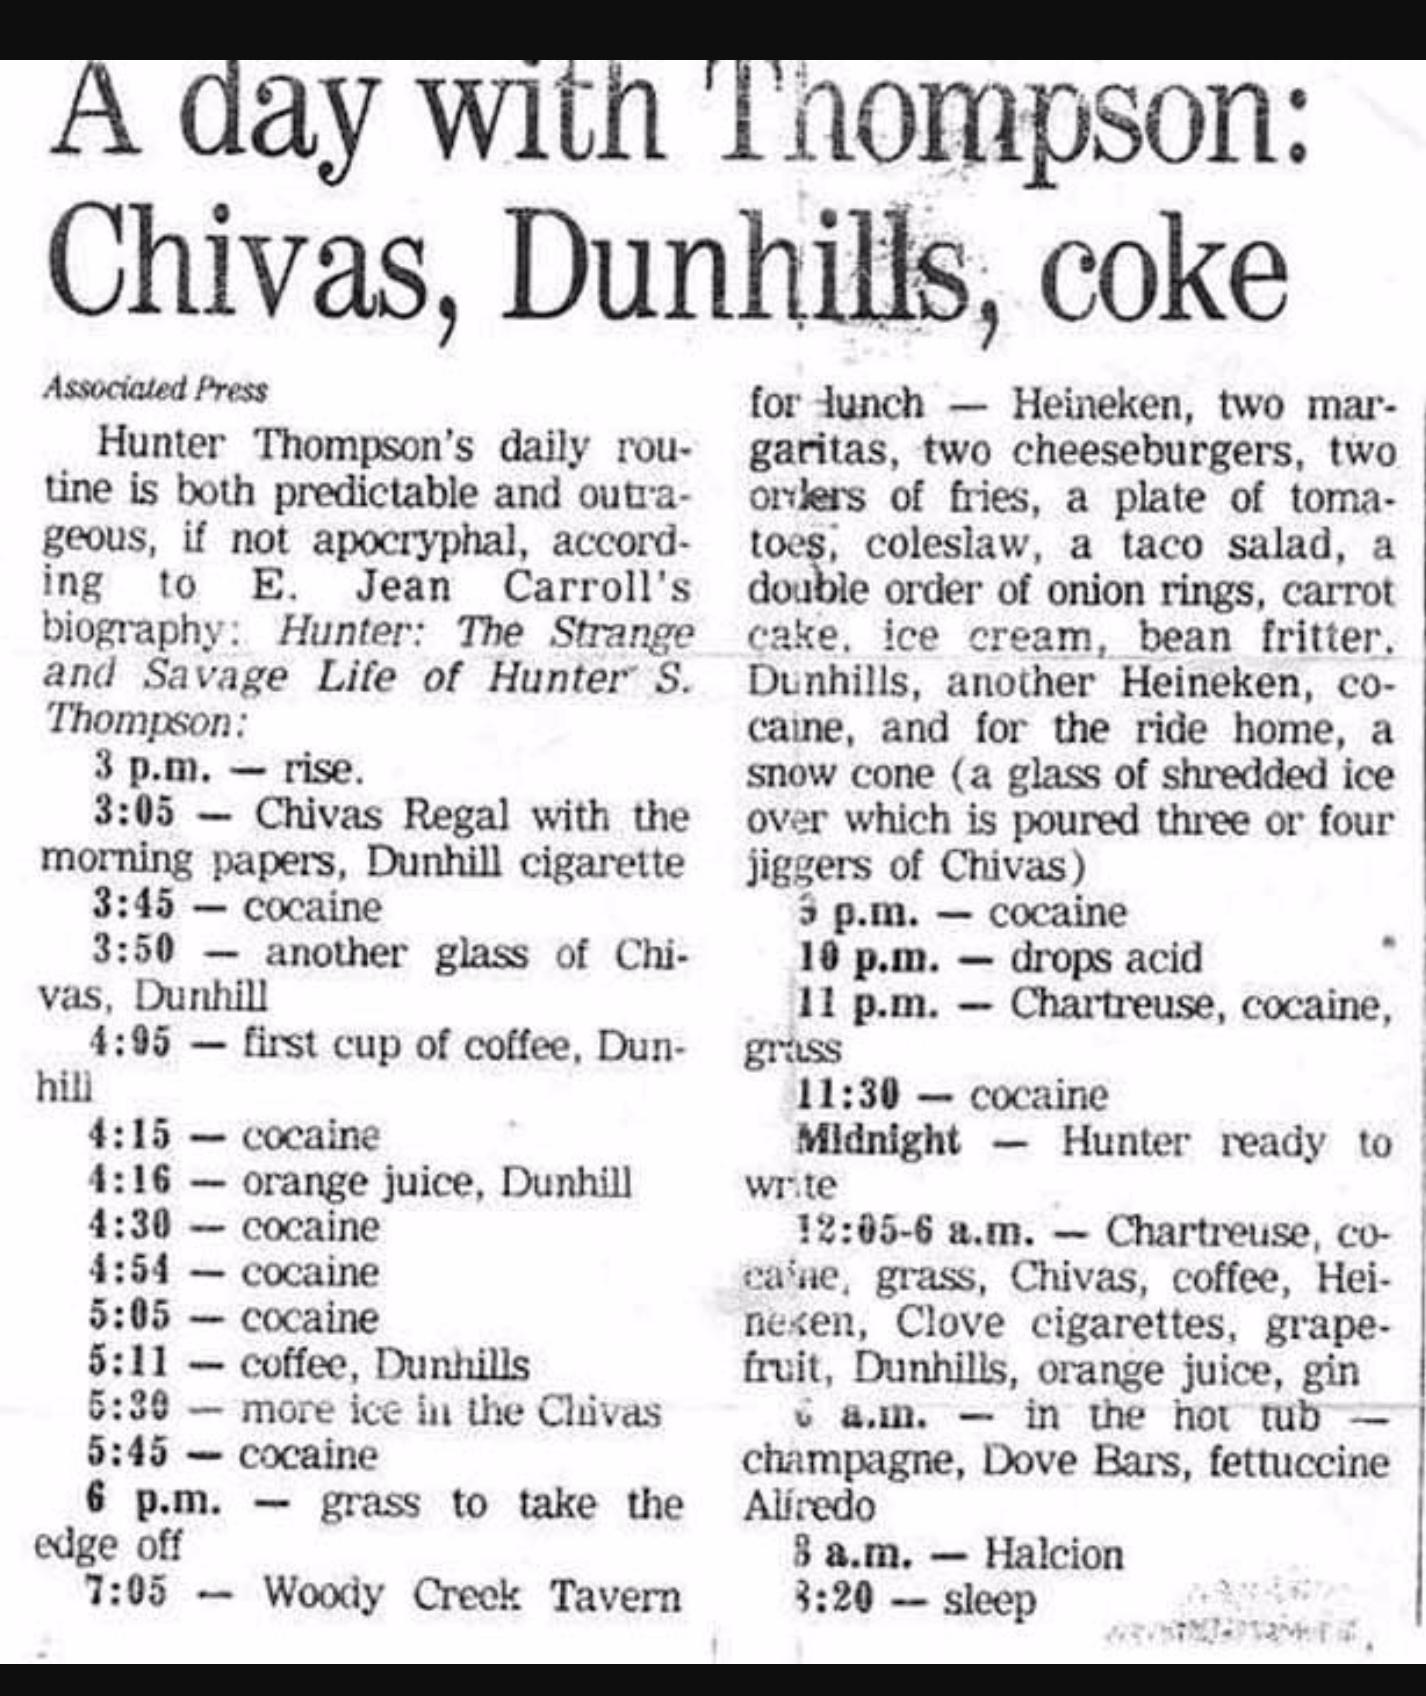 chivas dunhills coke